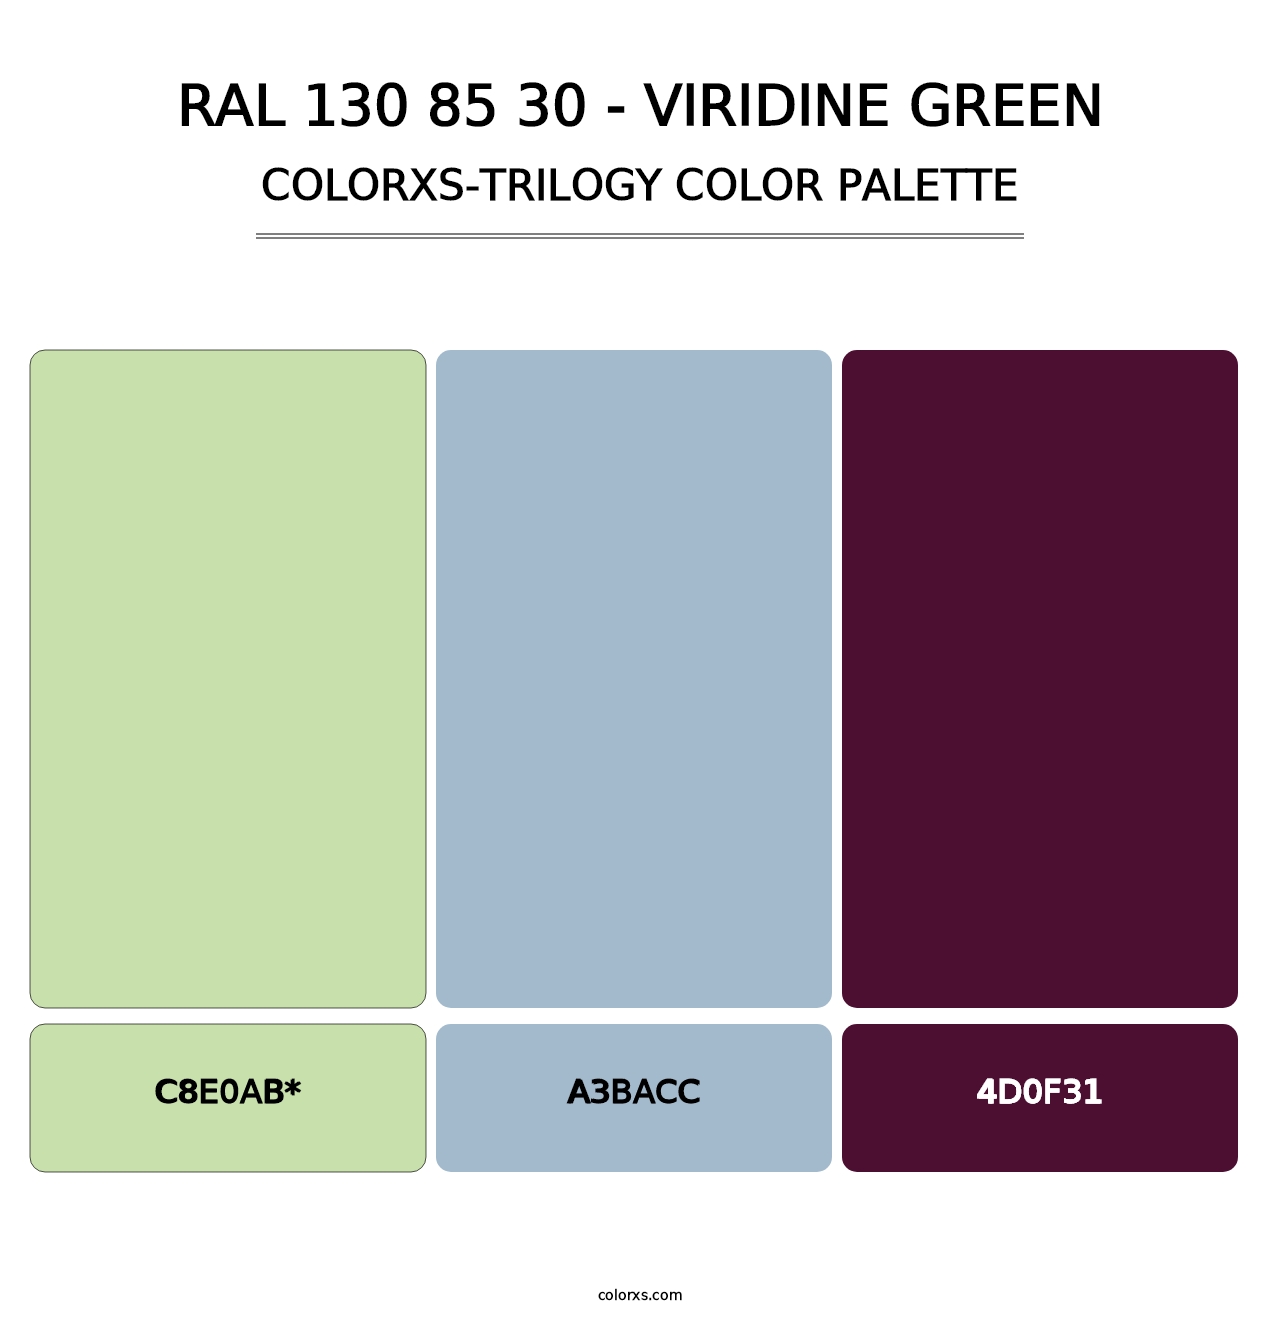 RAL 130 85 30 - Viridine Green - Colorxs Trilogy Palette